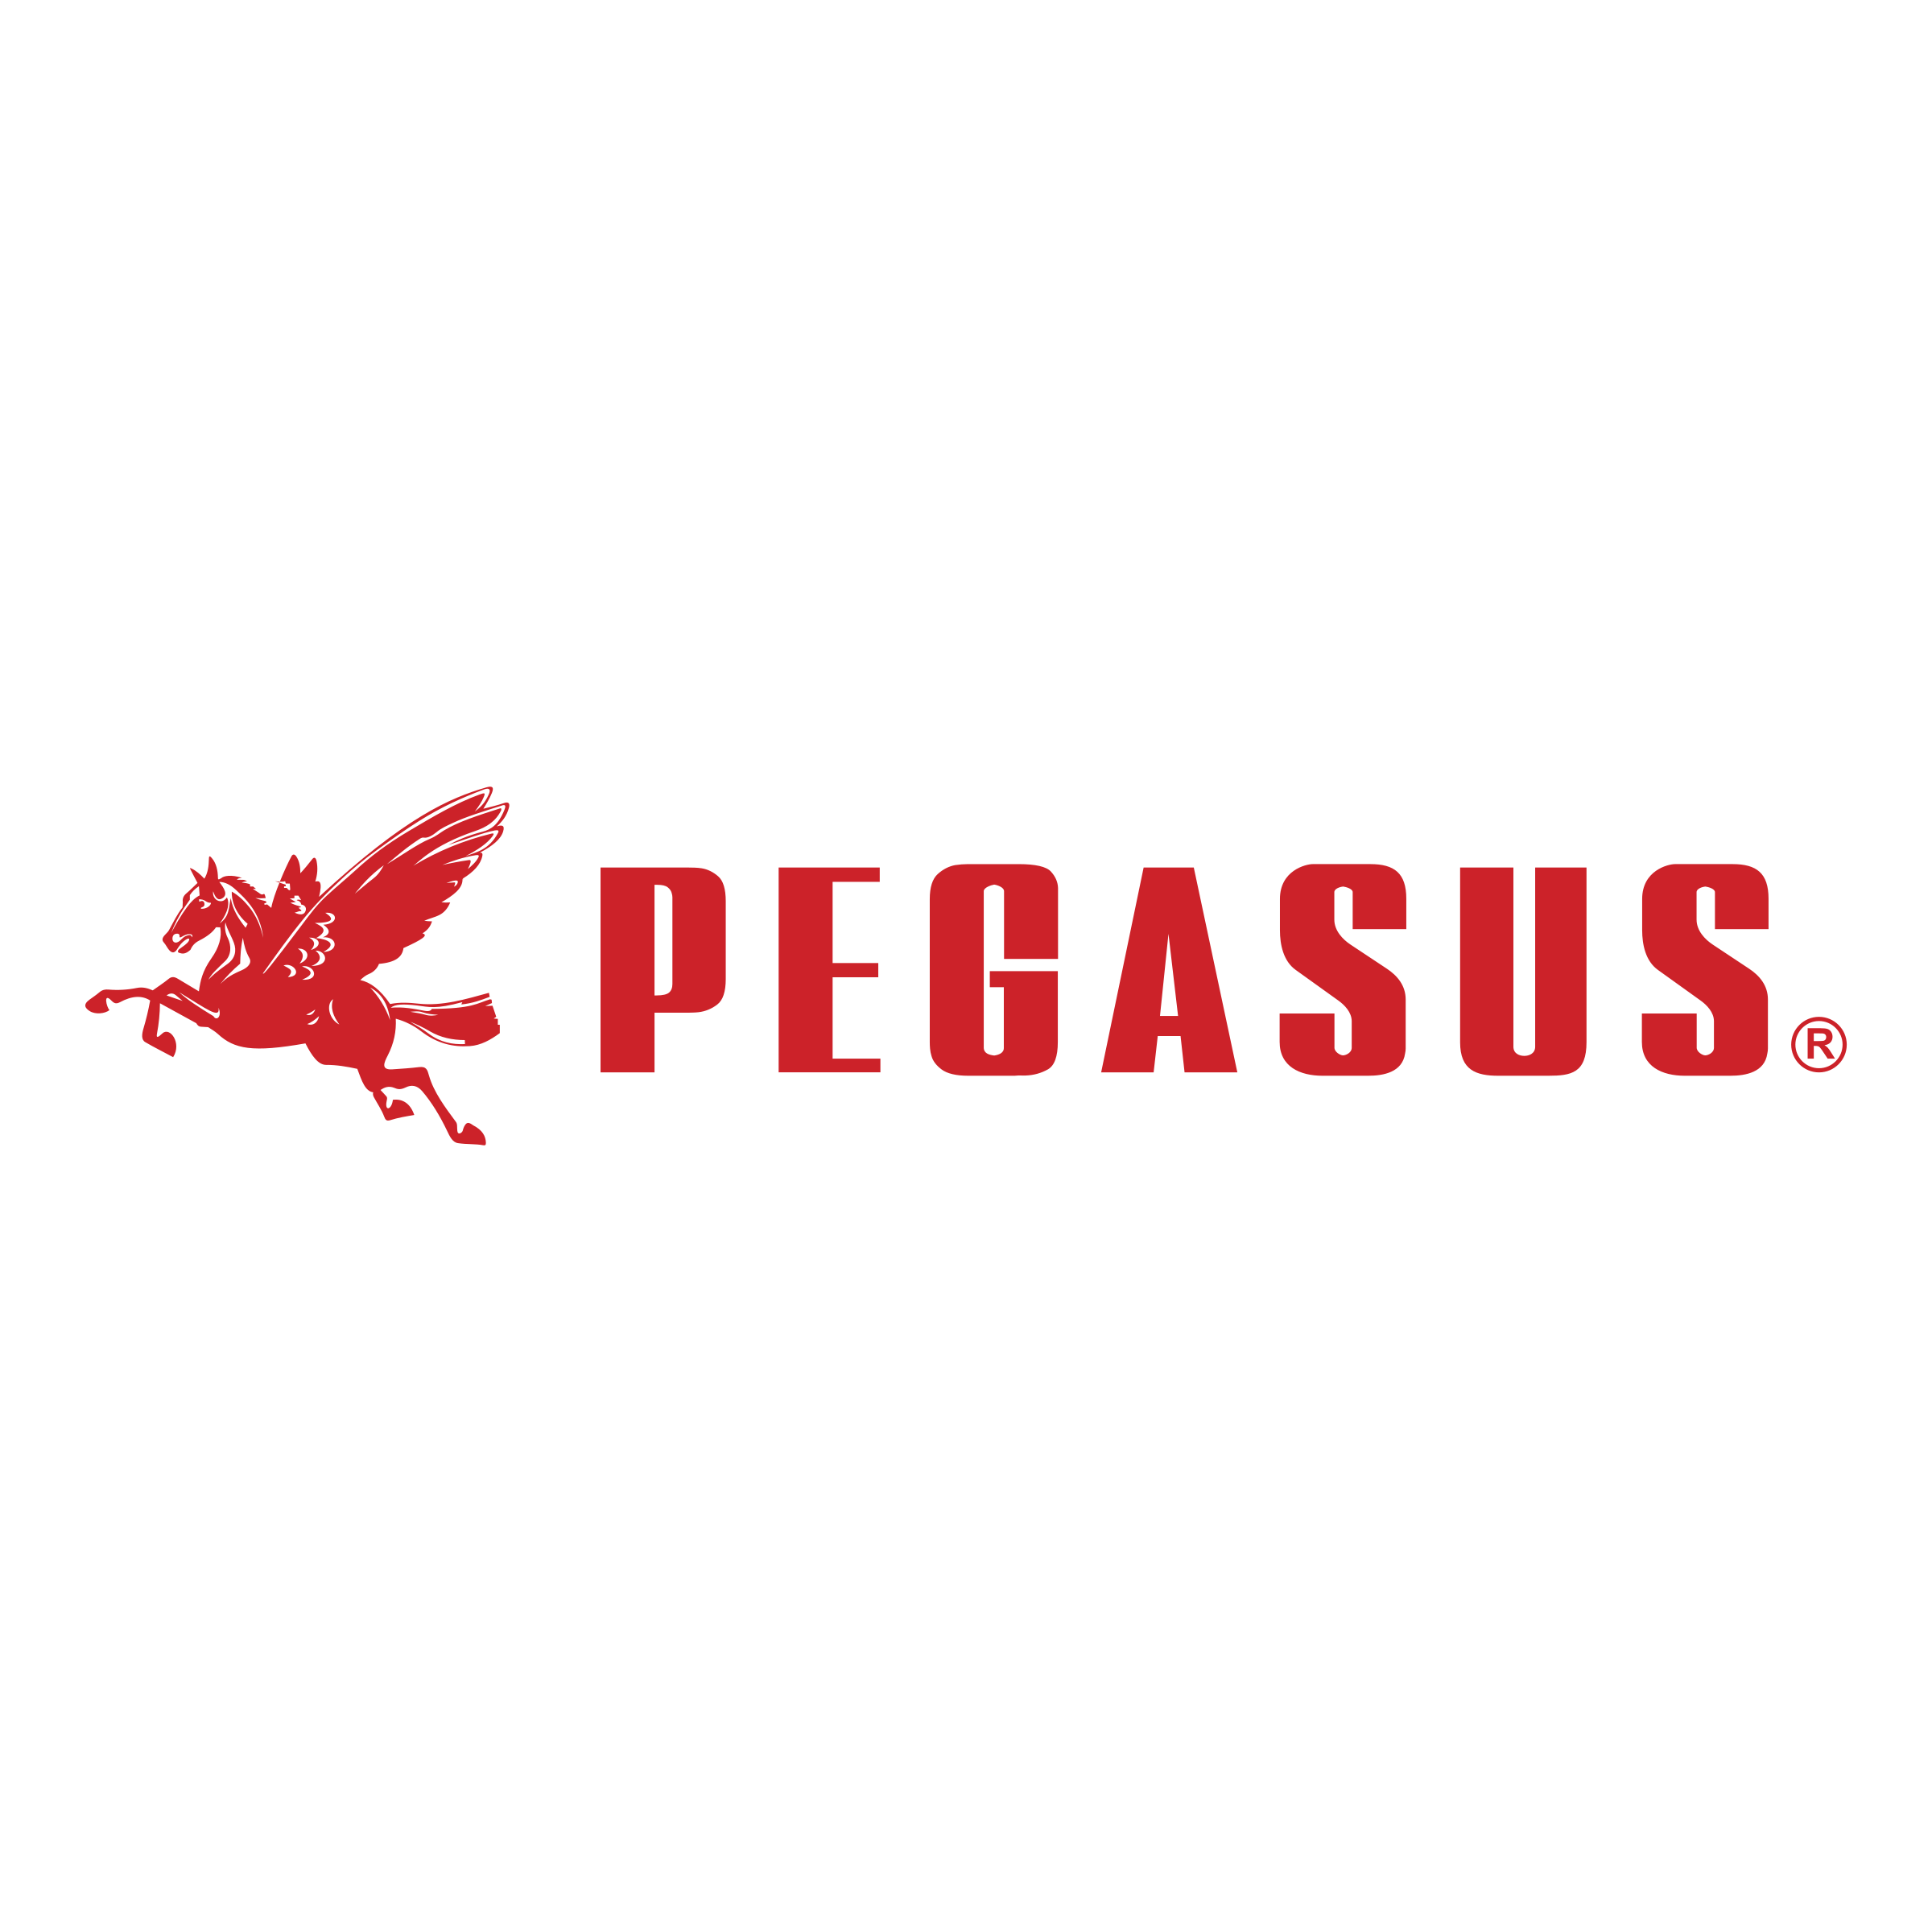 Pegasus Logo - Pegasus Logo PNG Transparent & SVG Vector - Freebie Supply